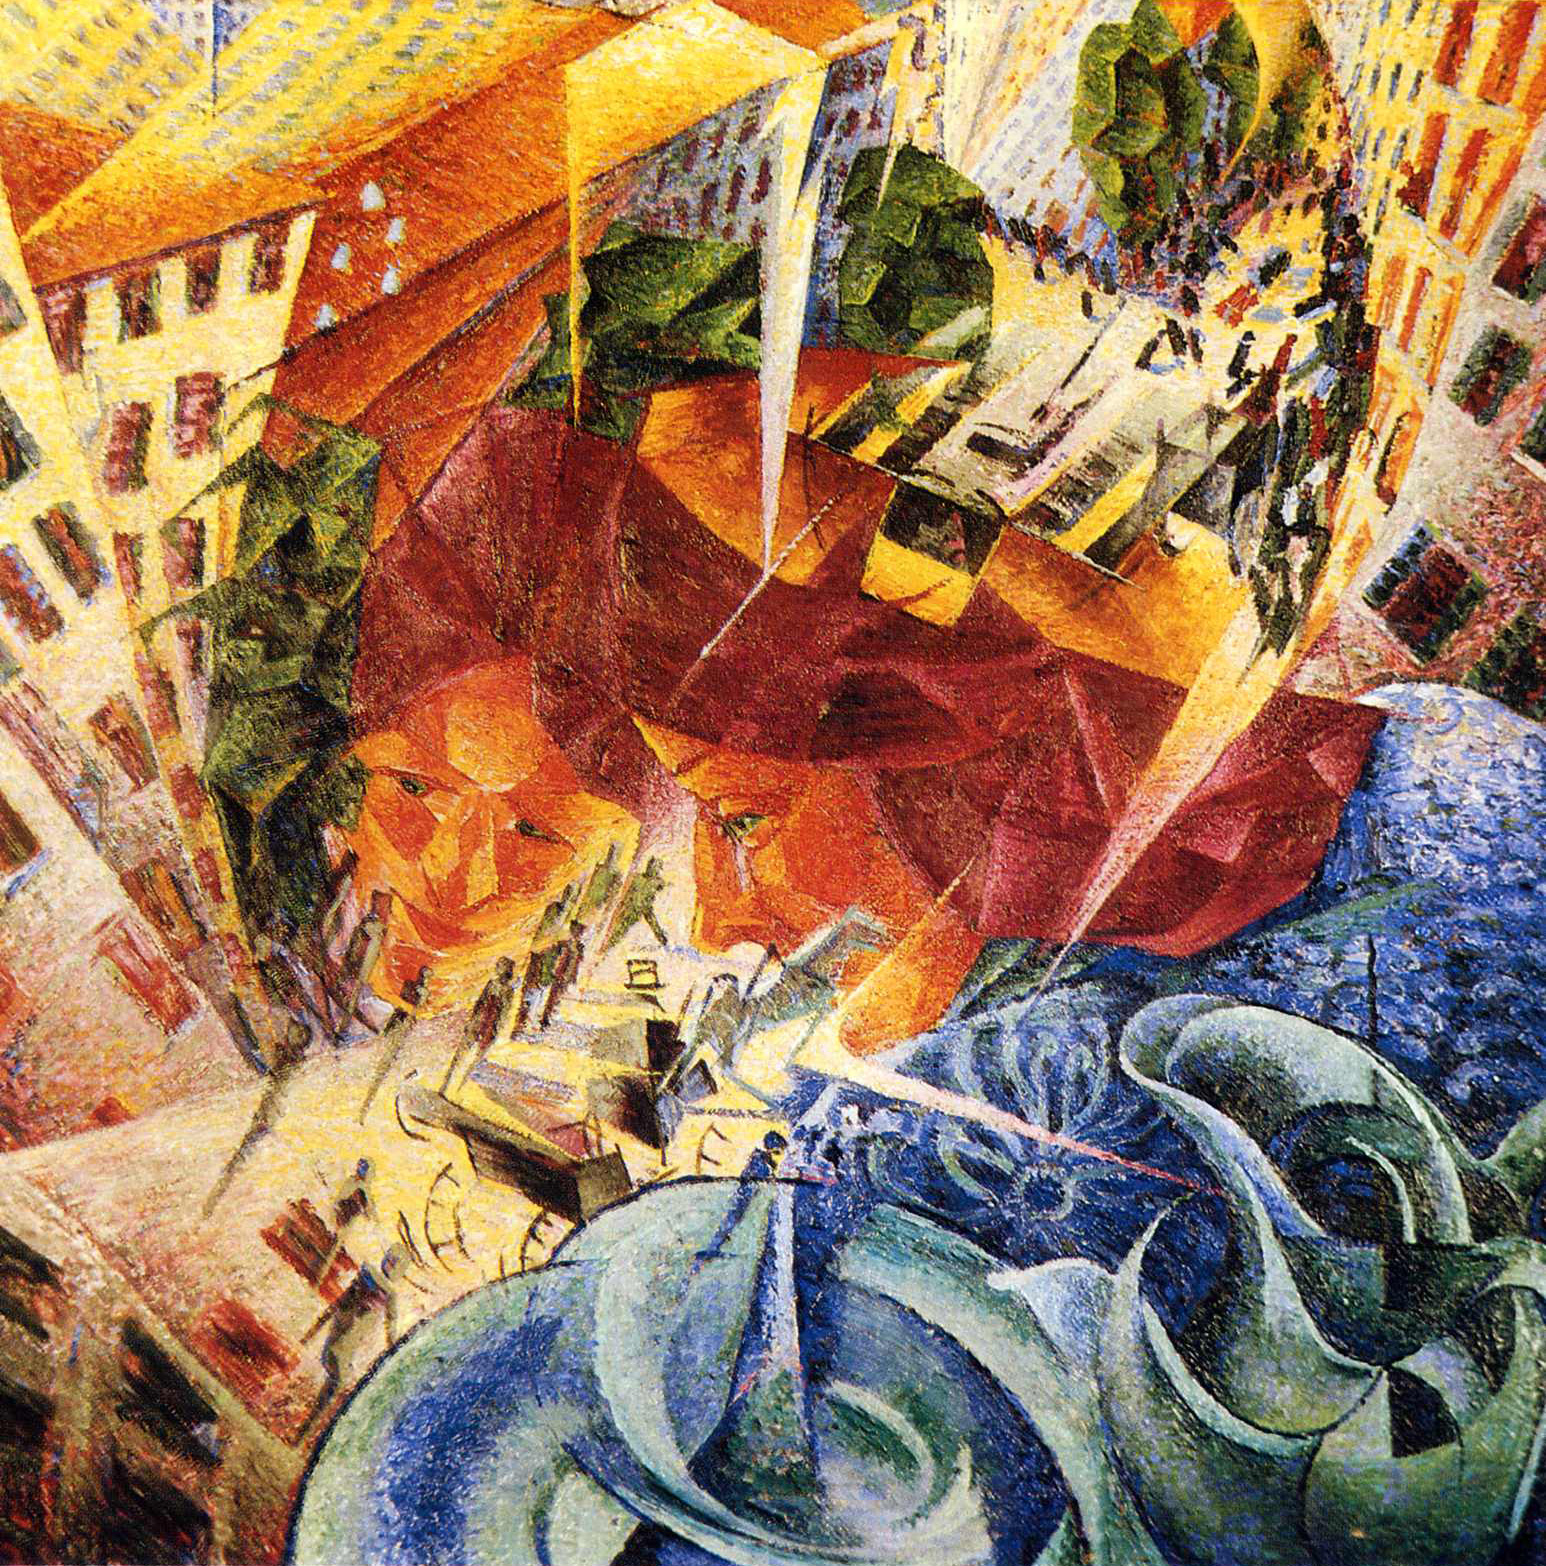 Simultaneous Visions by Umberto Boccioni